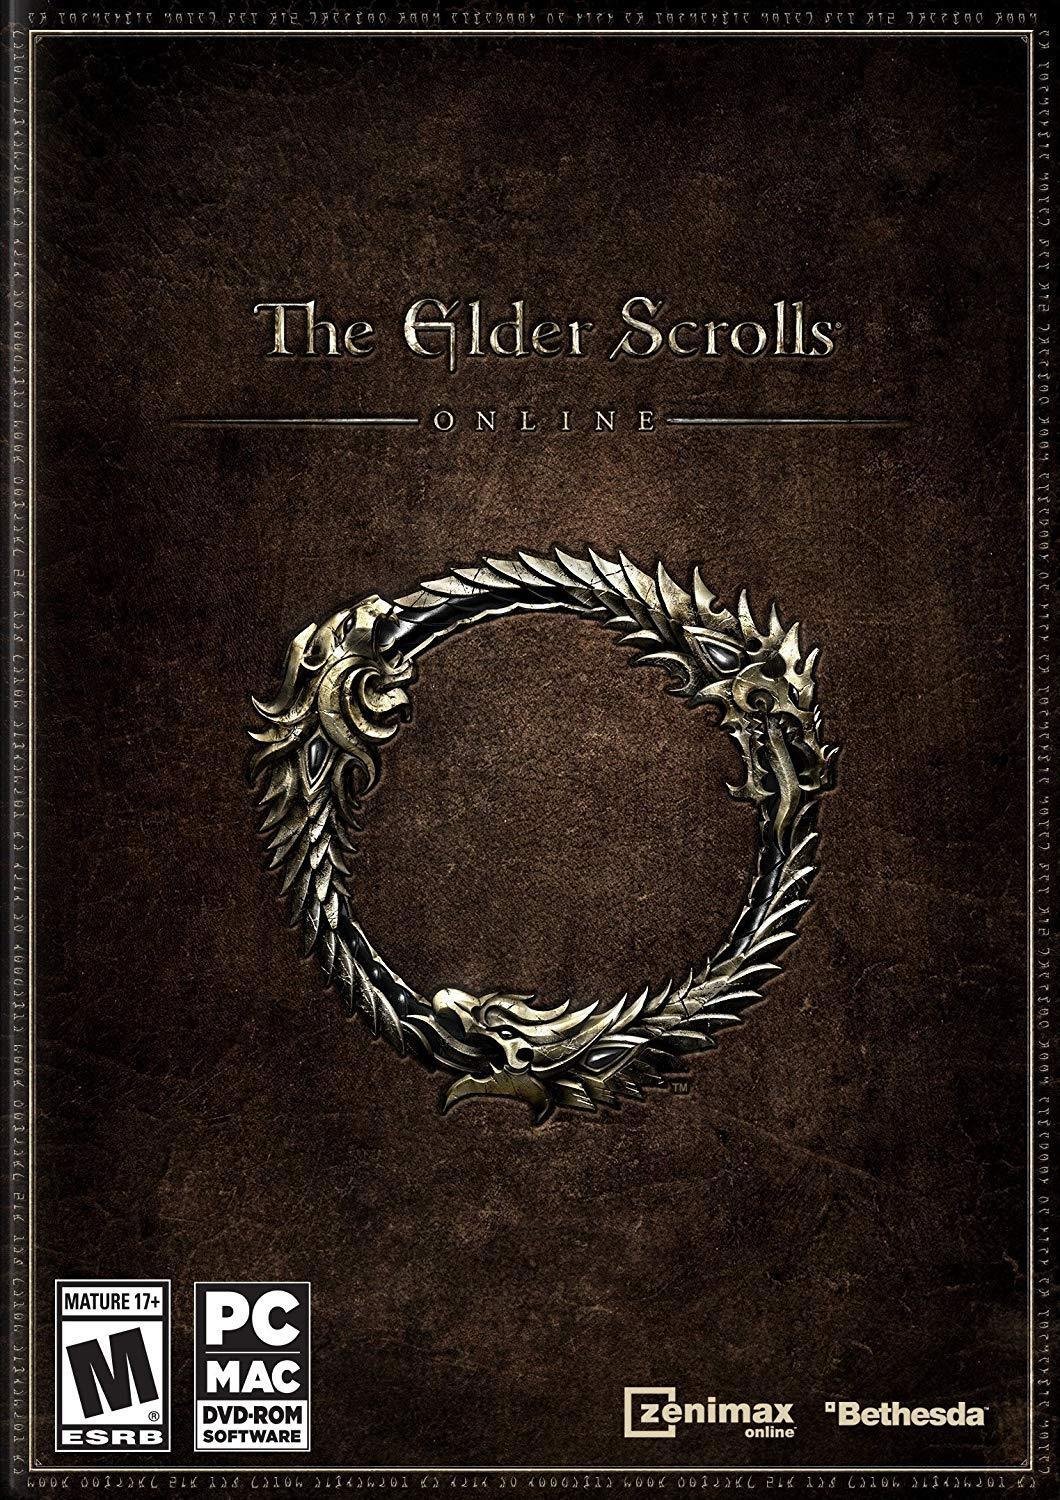 The Elder Scrolls Online for mac download free